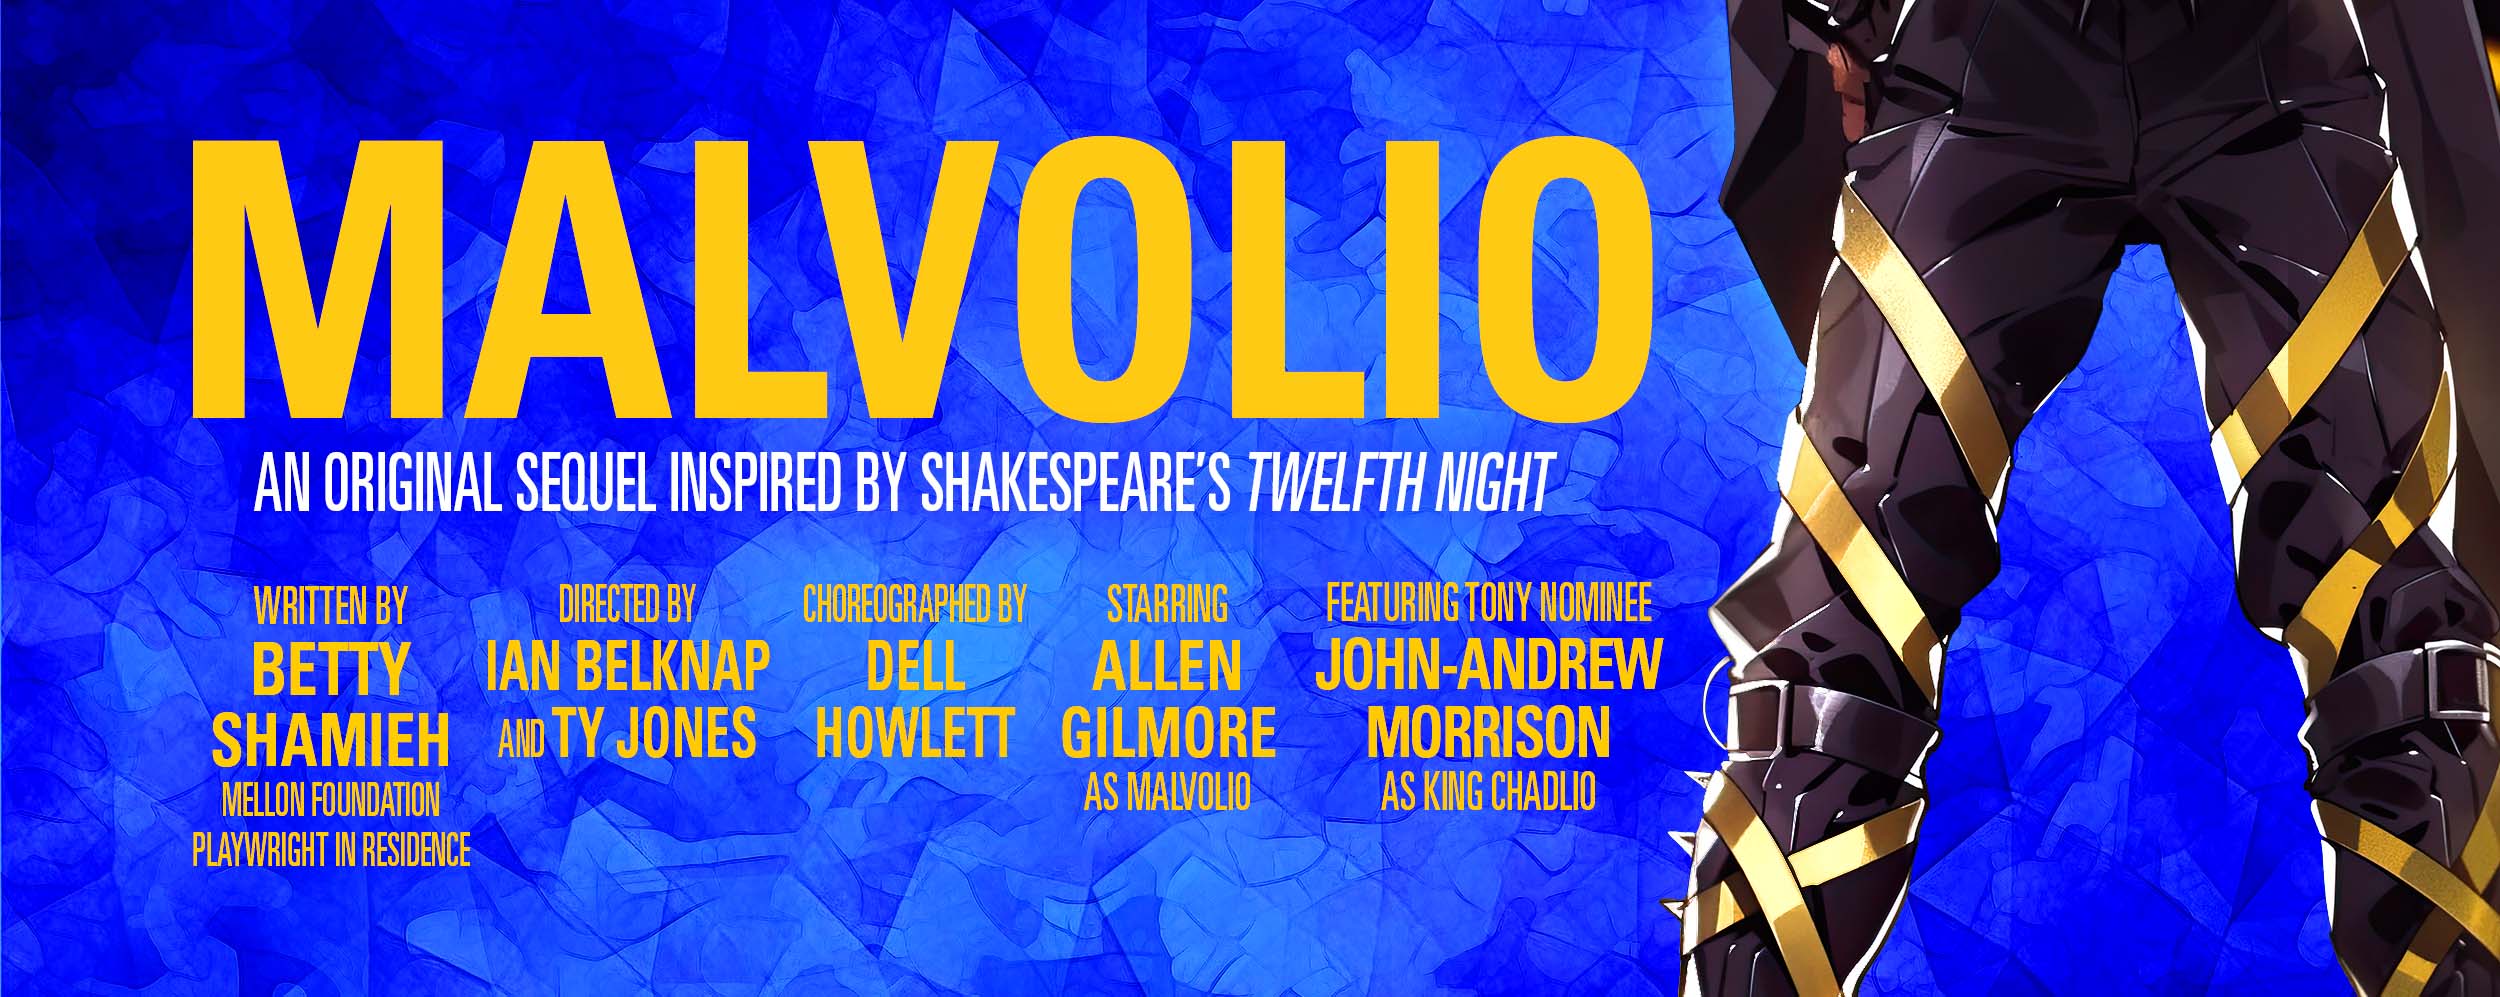 Malvolio Program - The Classical Theatre of Harlem